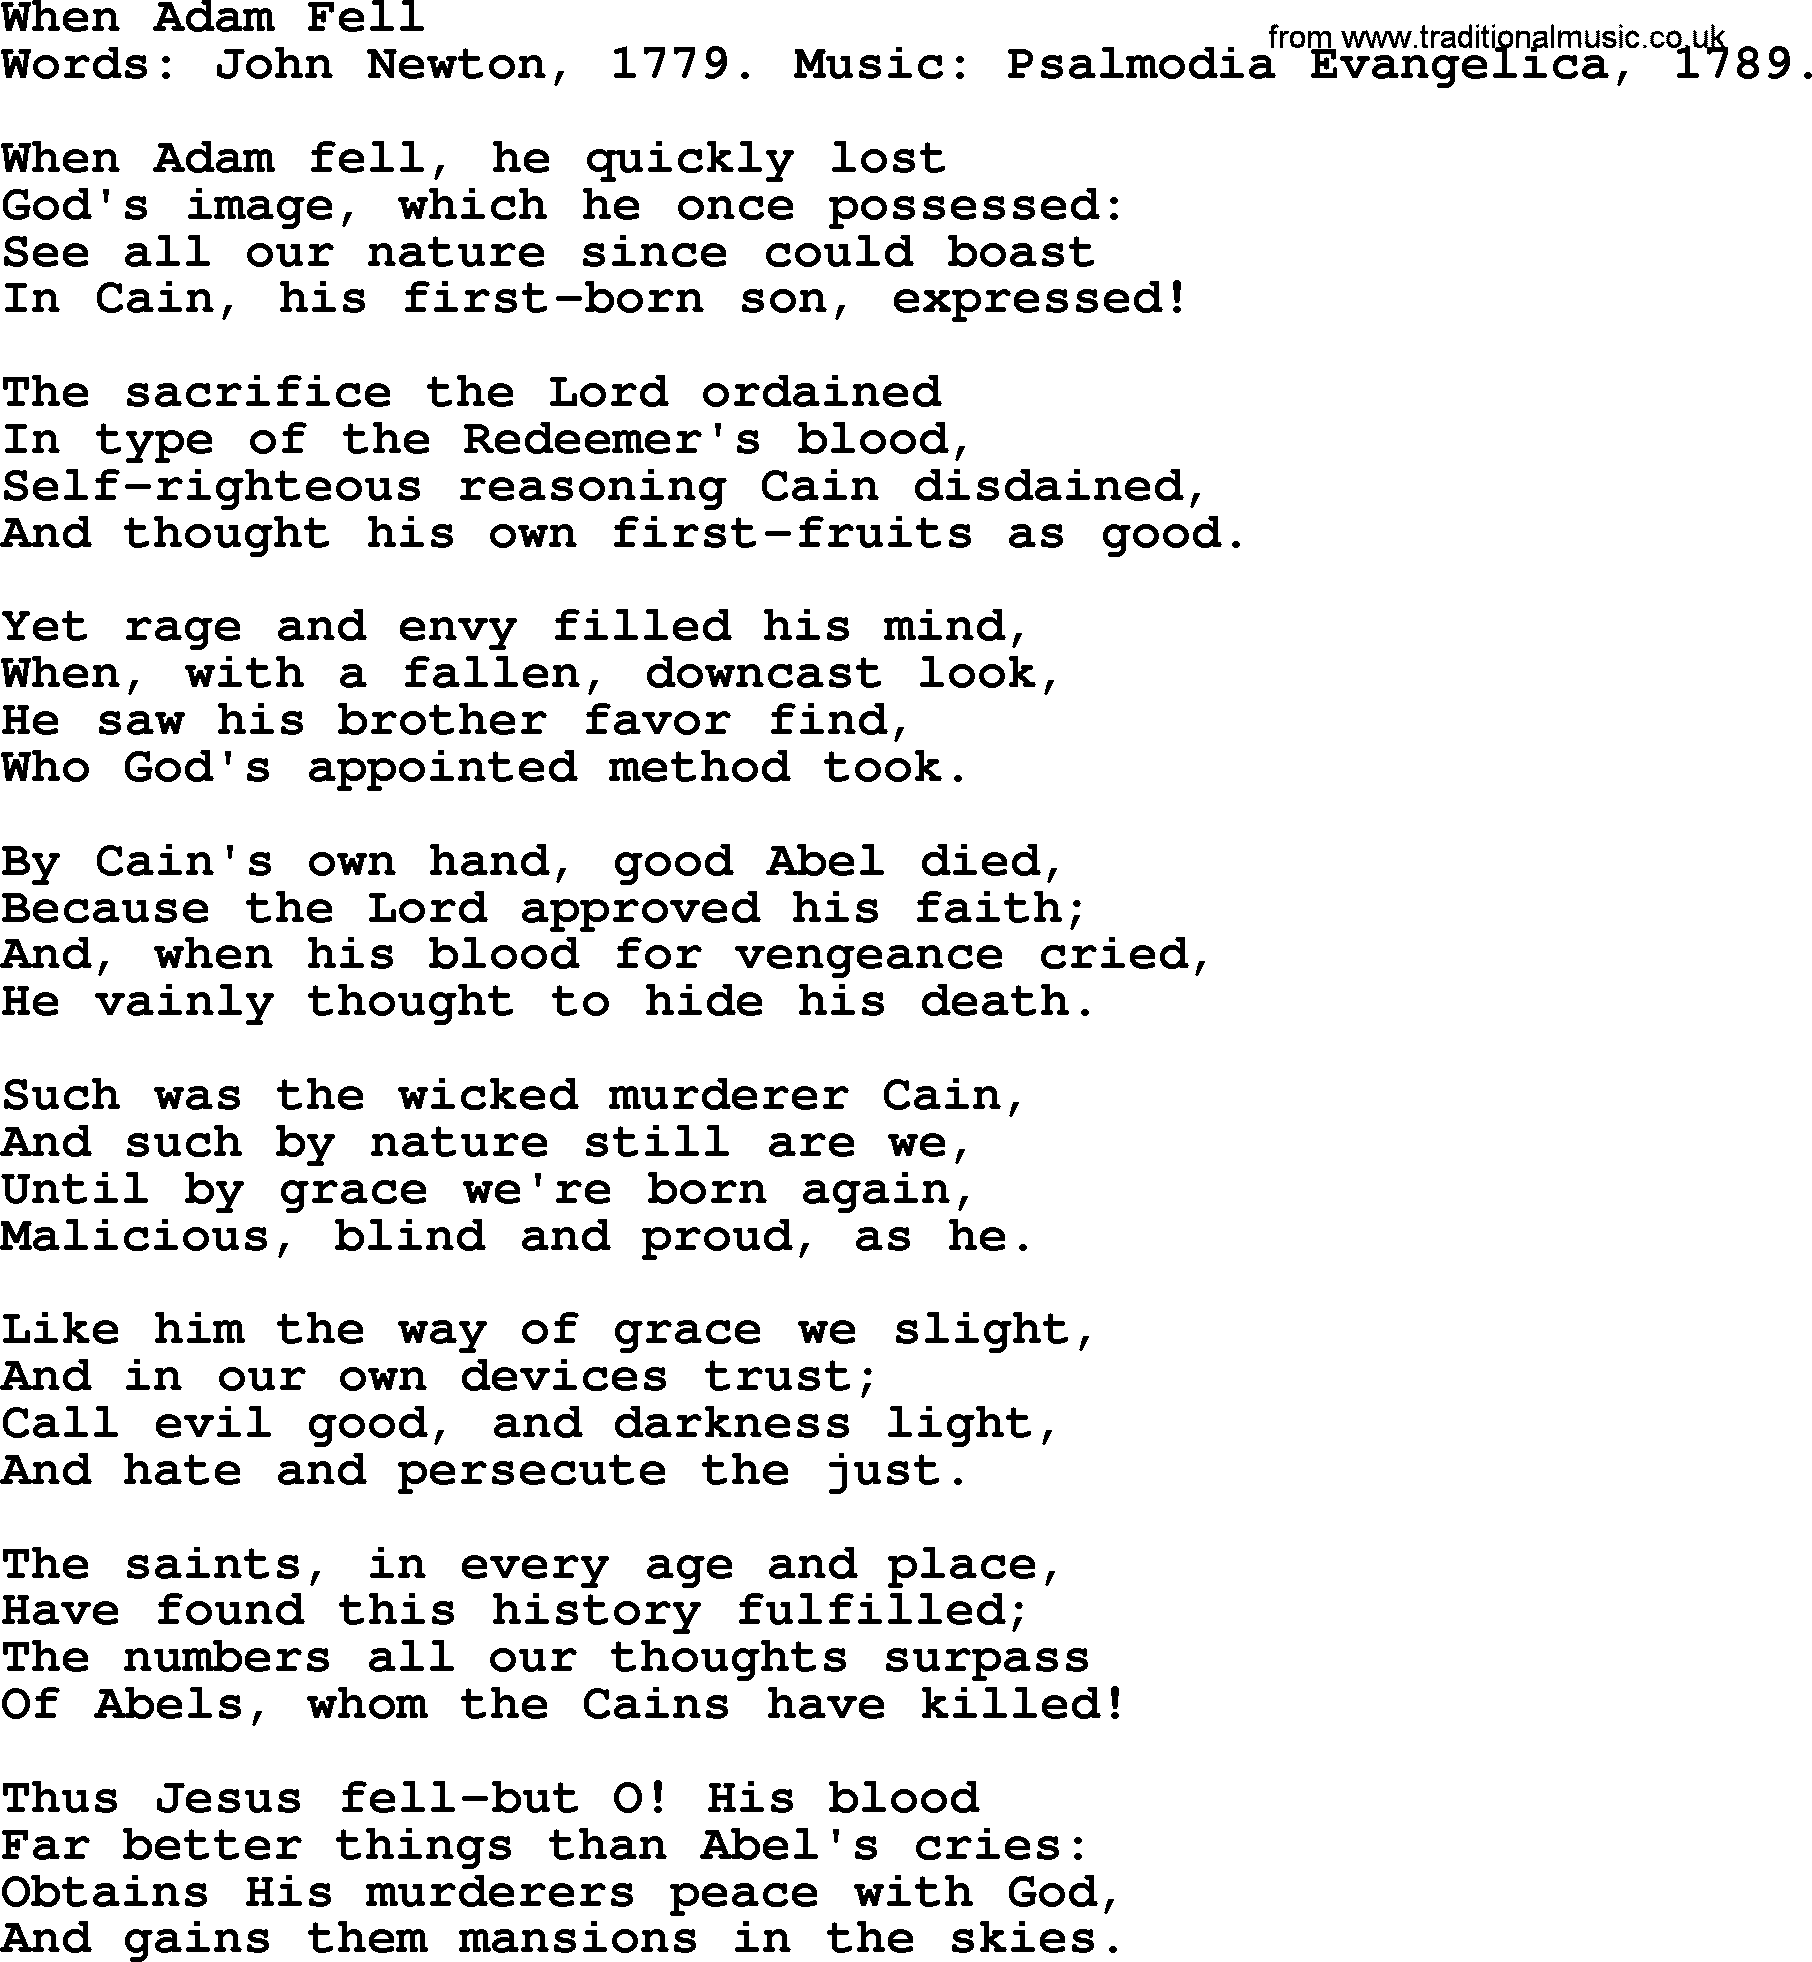 John Newton hymn: When Adam Fell, lyrics